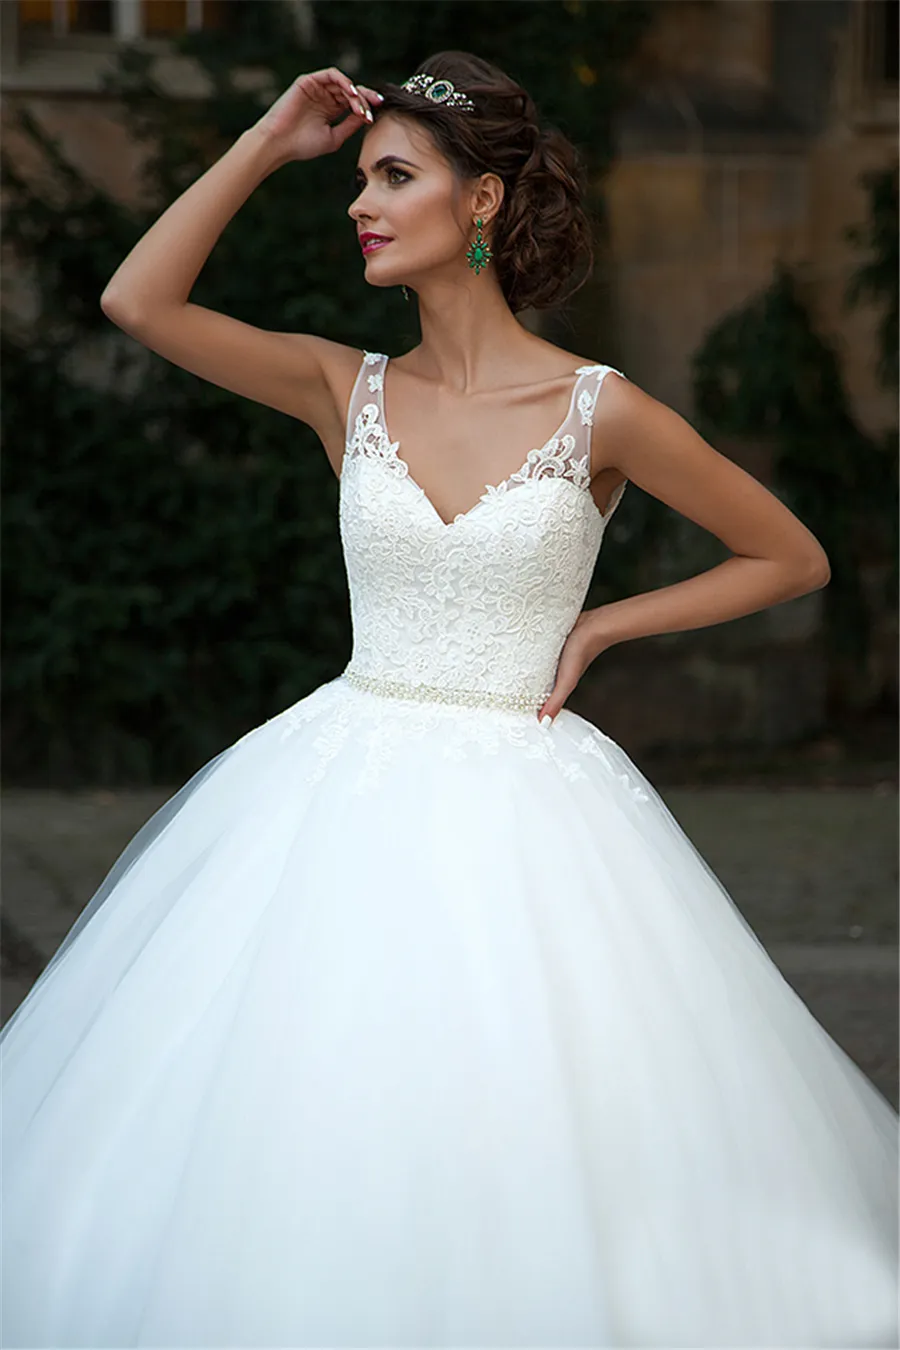 Spaghetti Straps Applique Beading Sash Ball Gown White Bridal Gowns vestidos de noiva com cristal Wedding Dress Fashion